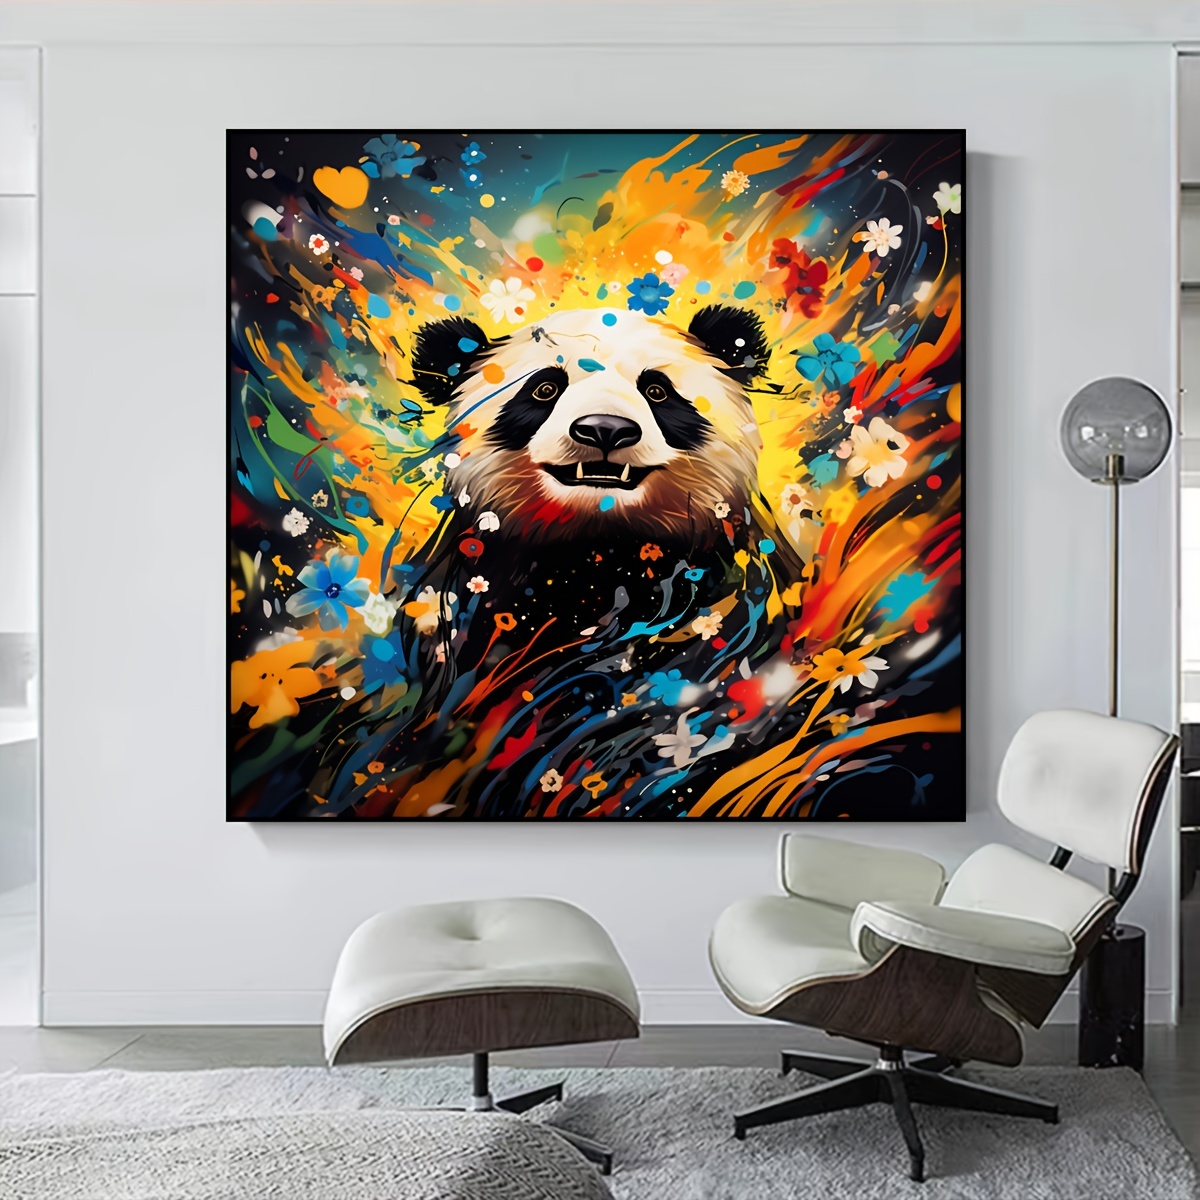 5D Diamond Painting Abstract Colorful Panda Kit